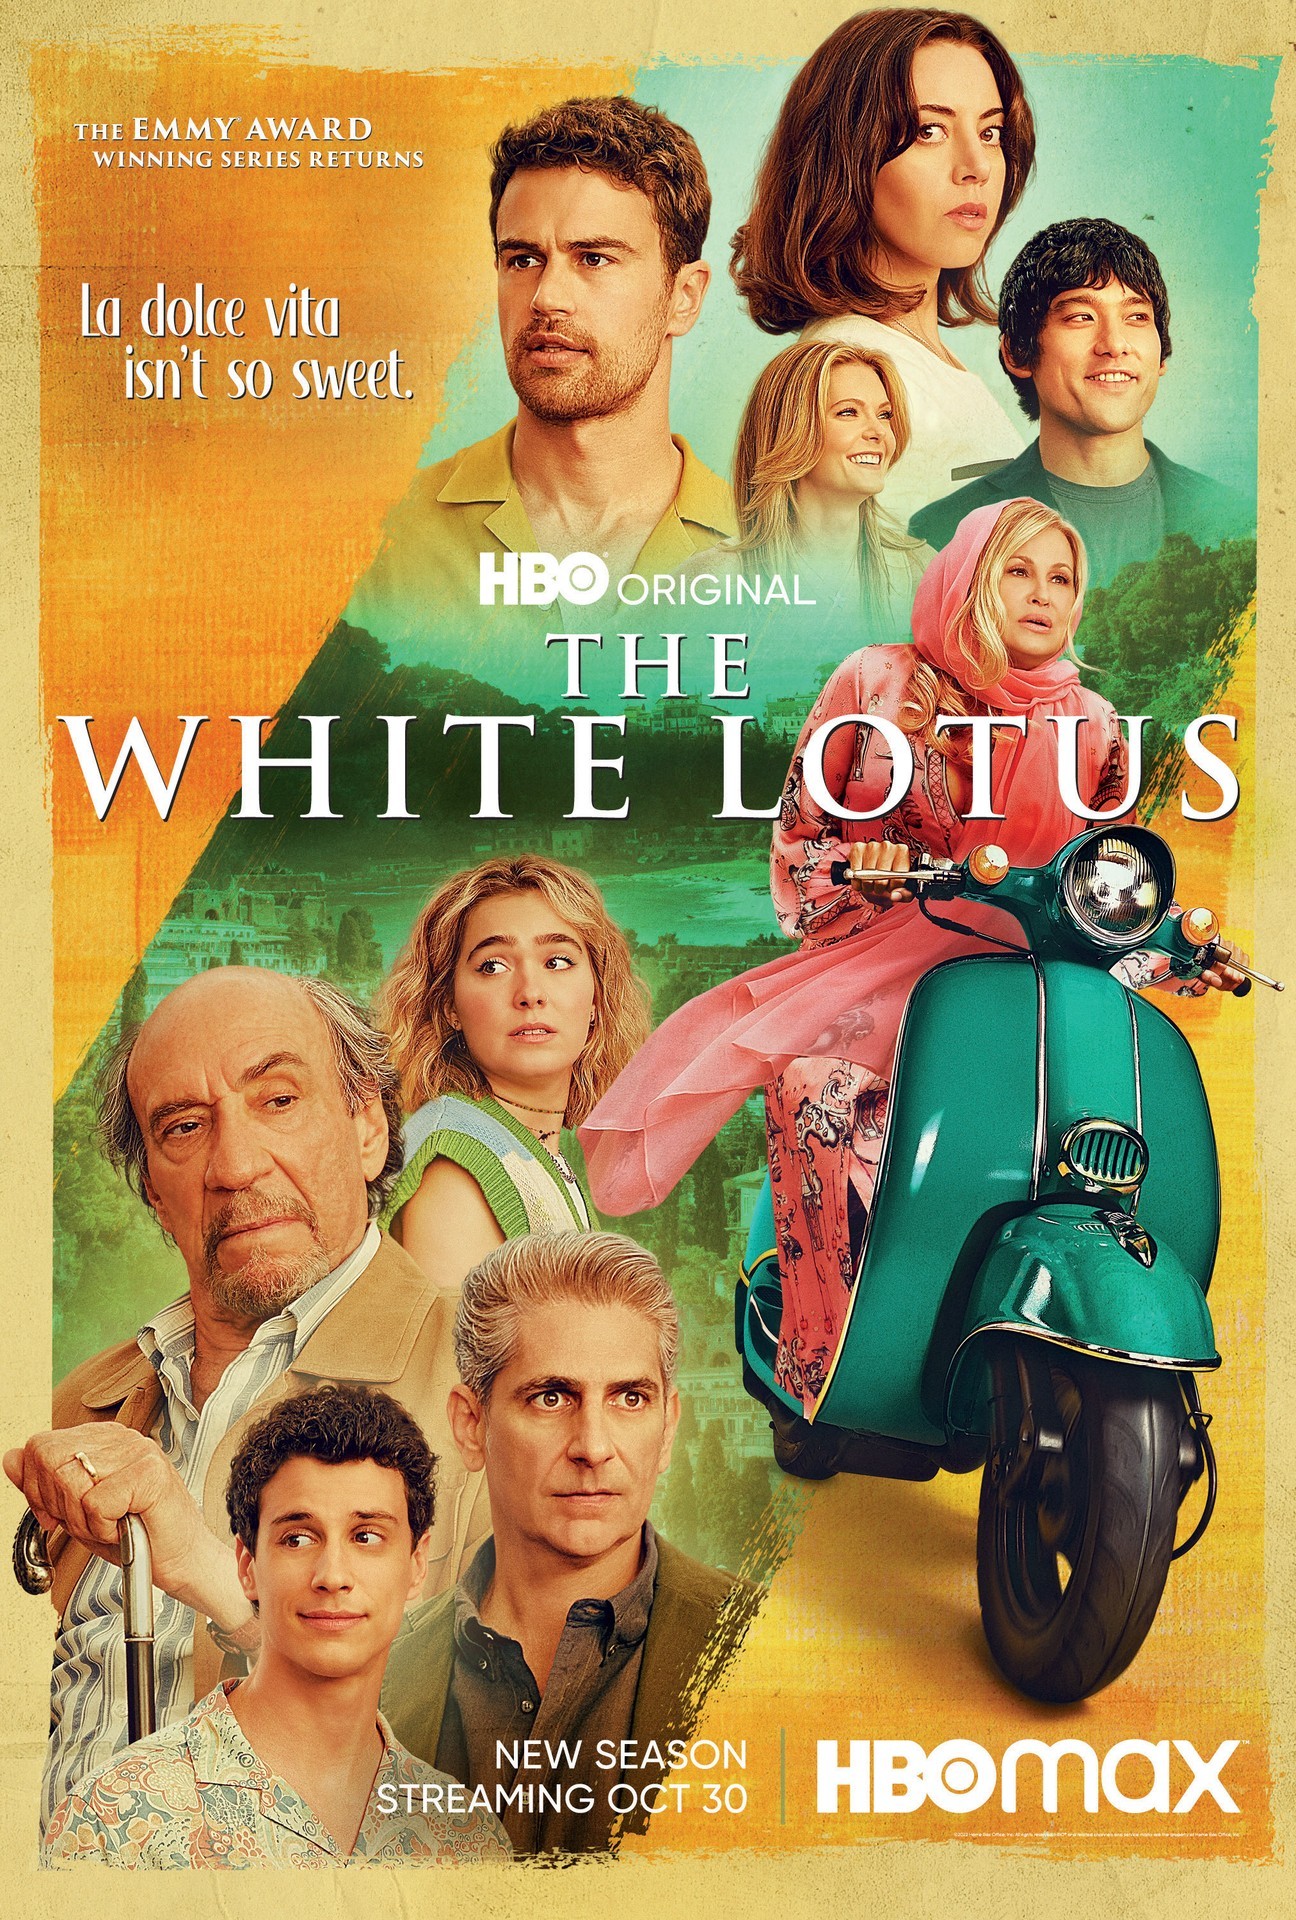 The White Lotus - Rotten Tomatoes